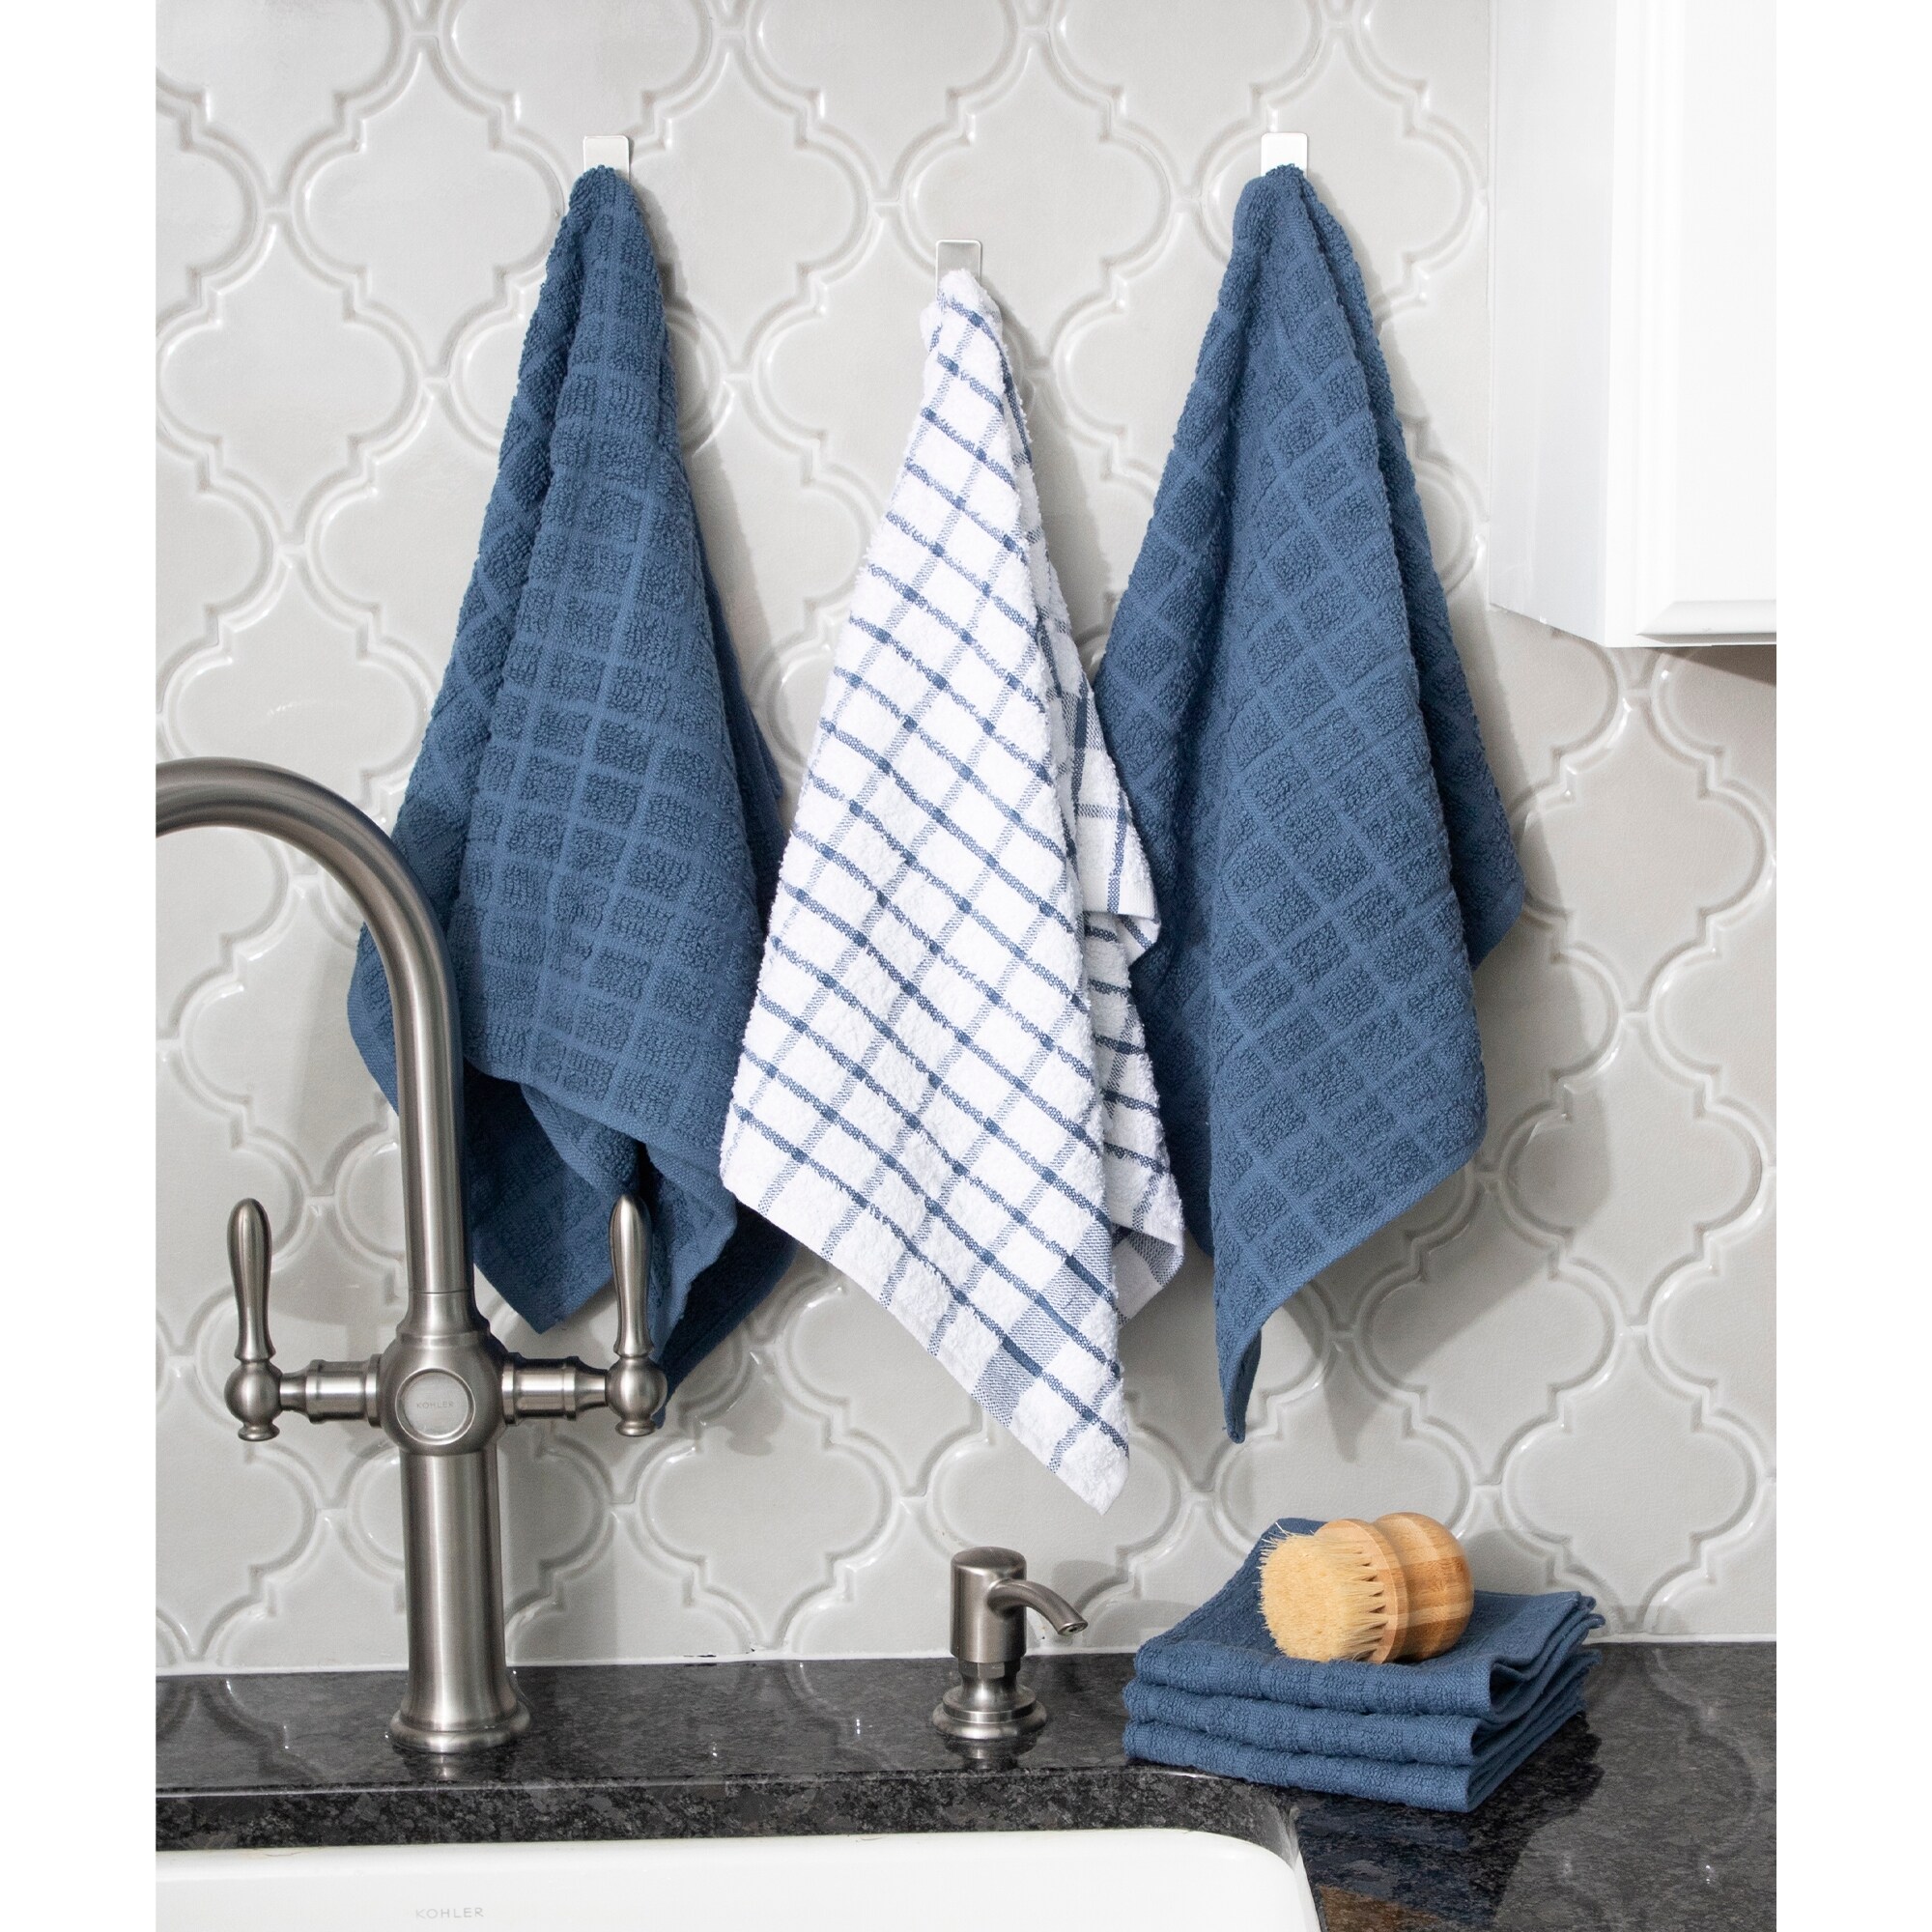 Dish Cloth Sets/dish Towels/wash Cloths/spa Cloths/kitchen Accessories/ kitchen Decor/hand Towel/crocheted Kitchen Set/dish Cloths/eco Cloths 